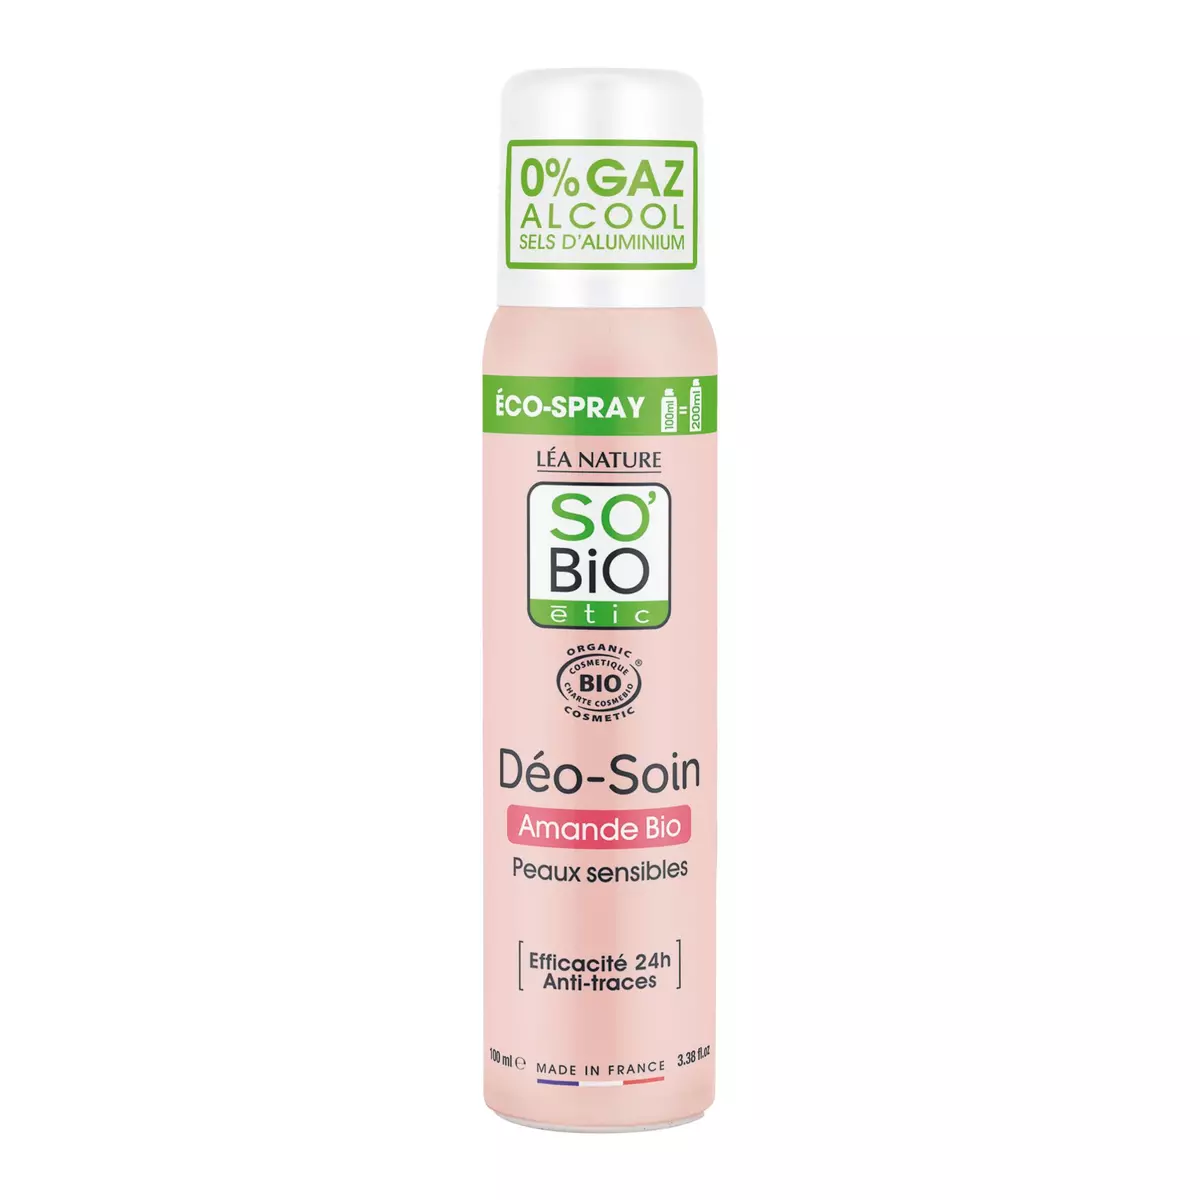 SO BIO ETIC Déodorant soin eco-spray peau sensible amande bio 24h anti-traces sans sels d'aluminium 100ml